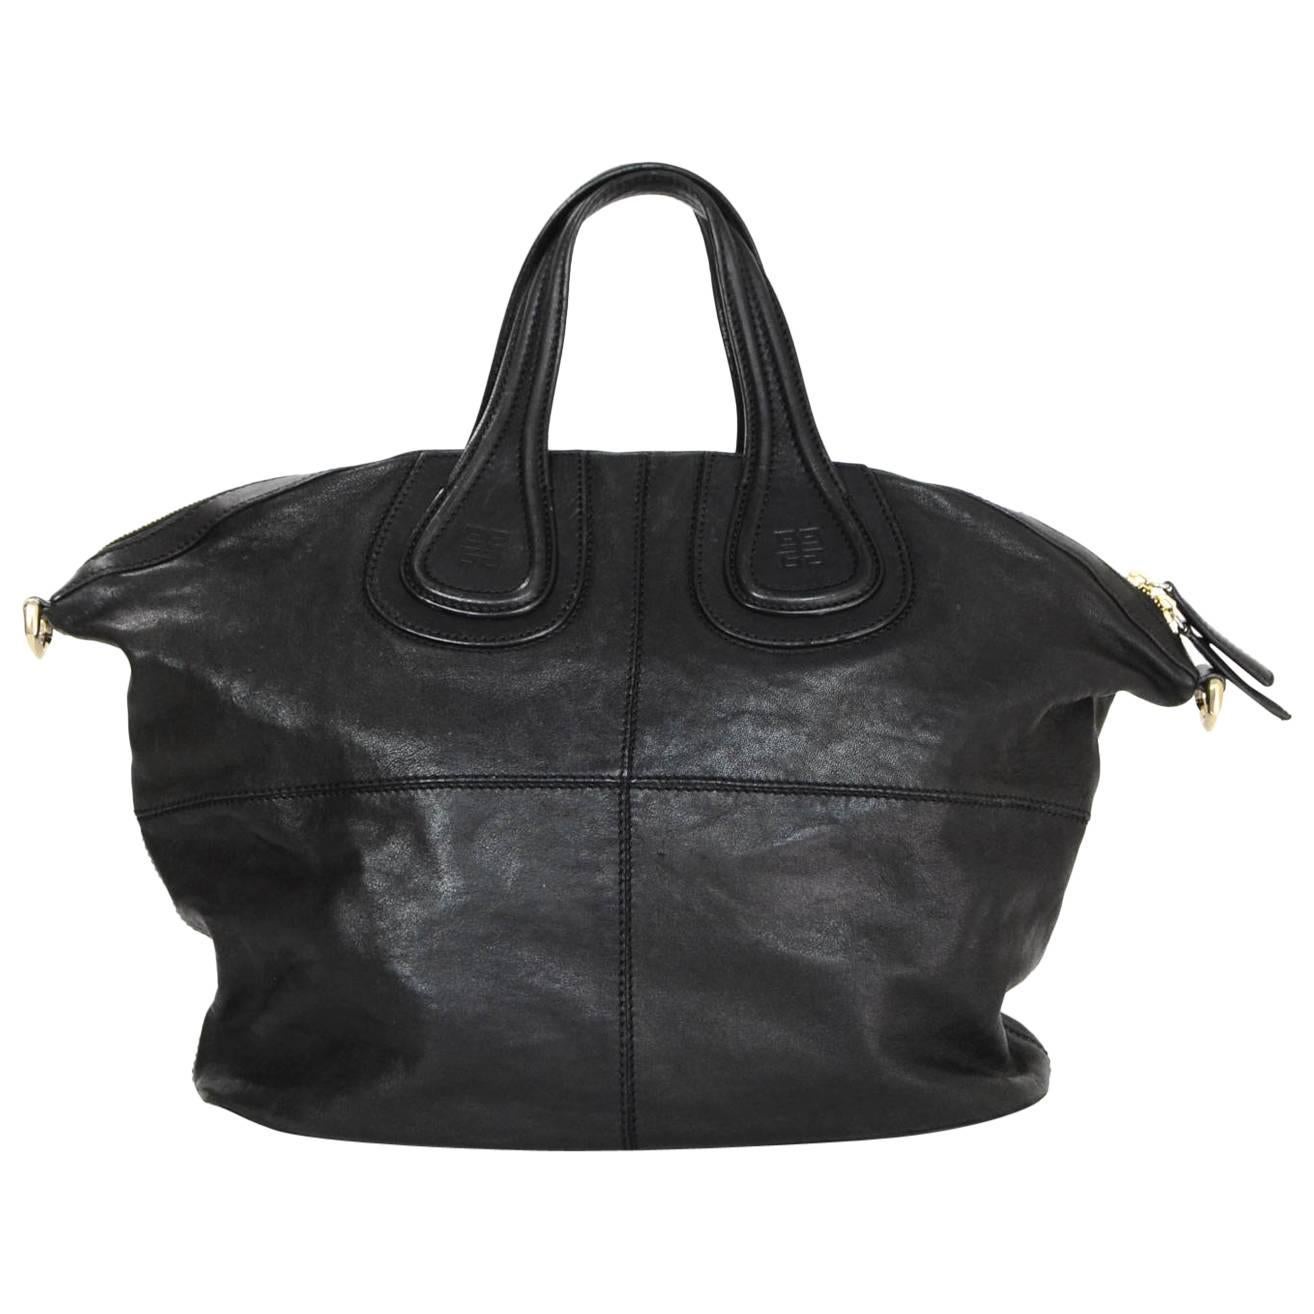 Givenchy Black Leather Medium Nightingale Tote Bag- Missing Strap